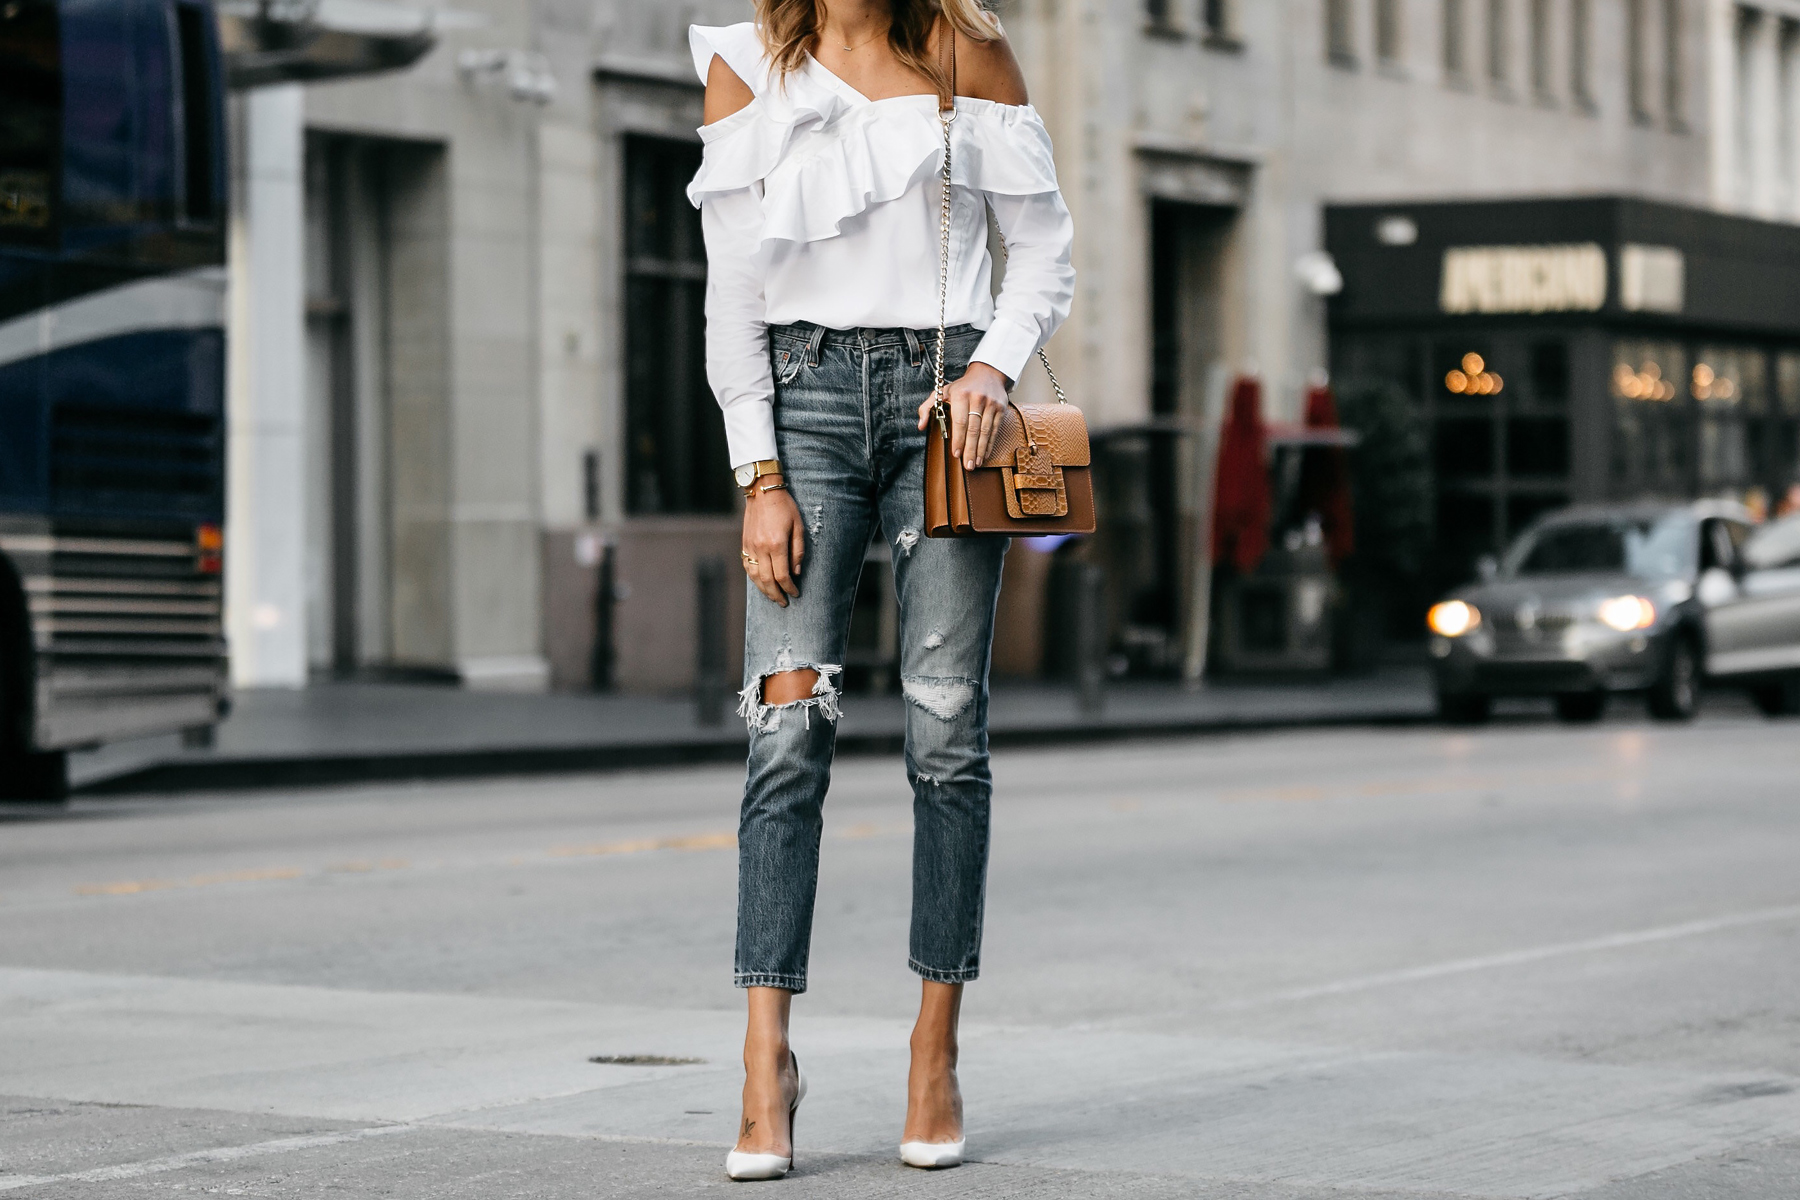 Shopbop White Asymmetrical Ruffle Top Levis Denim Ripped Skinny Jeans Christian Louboutin White Pumps Street Style Dallas Blogger Fashion Blogger